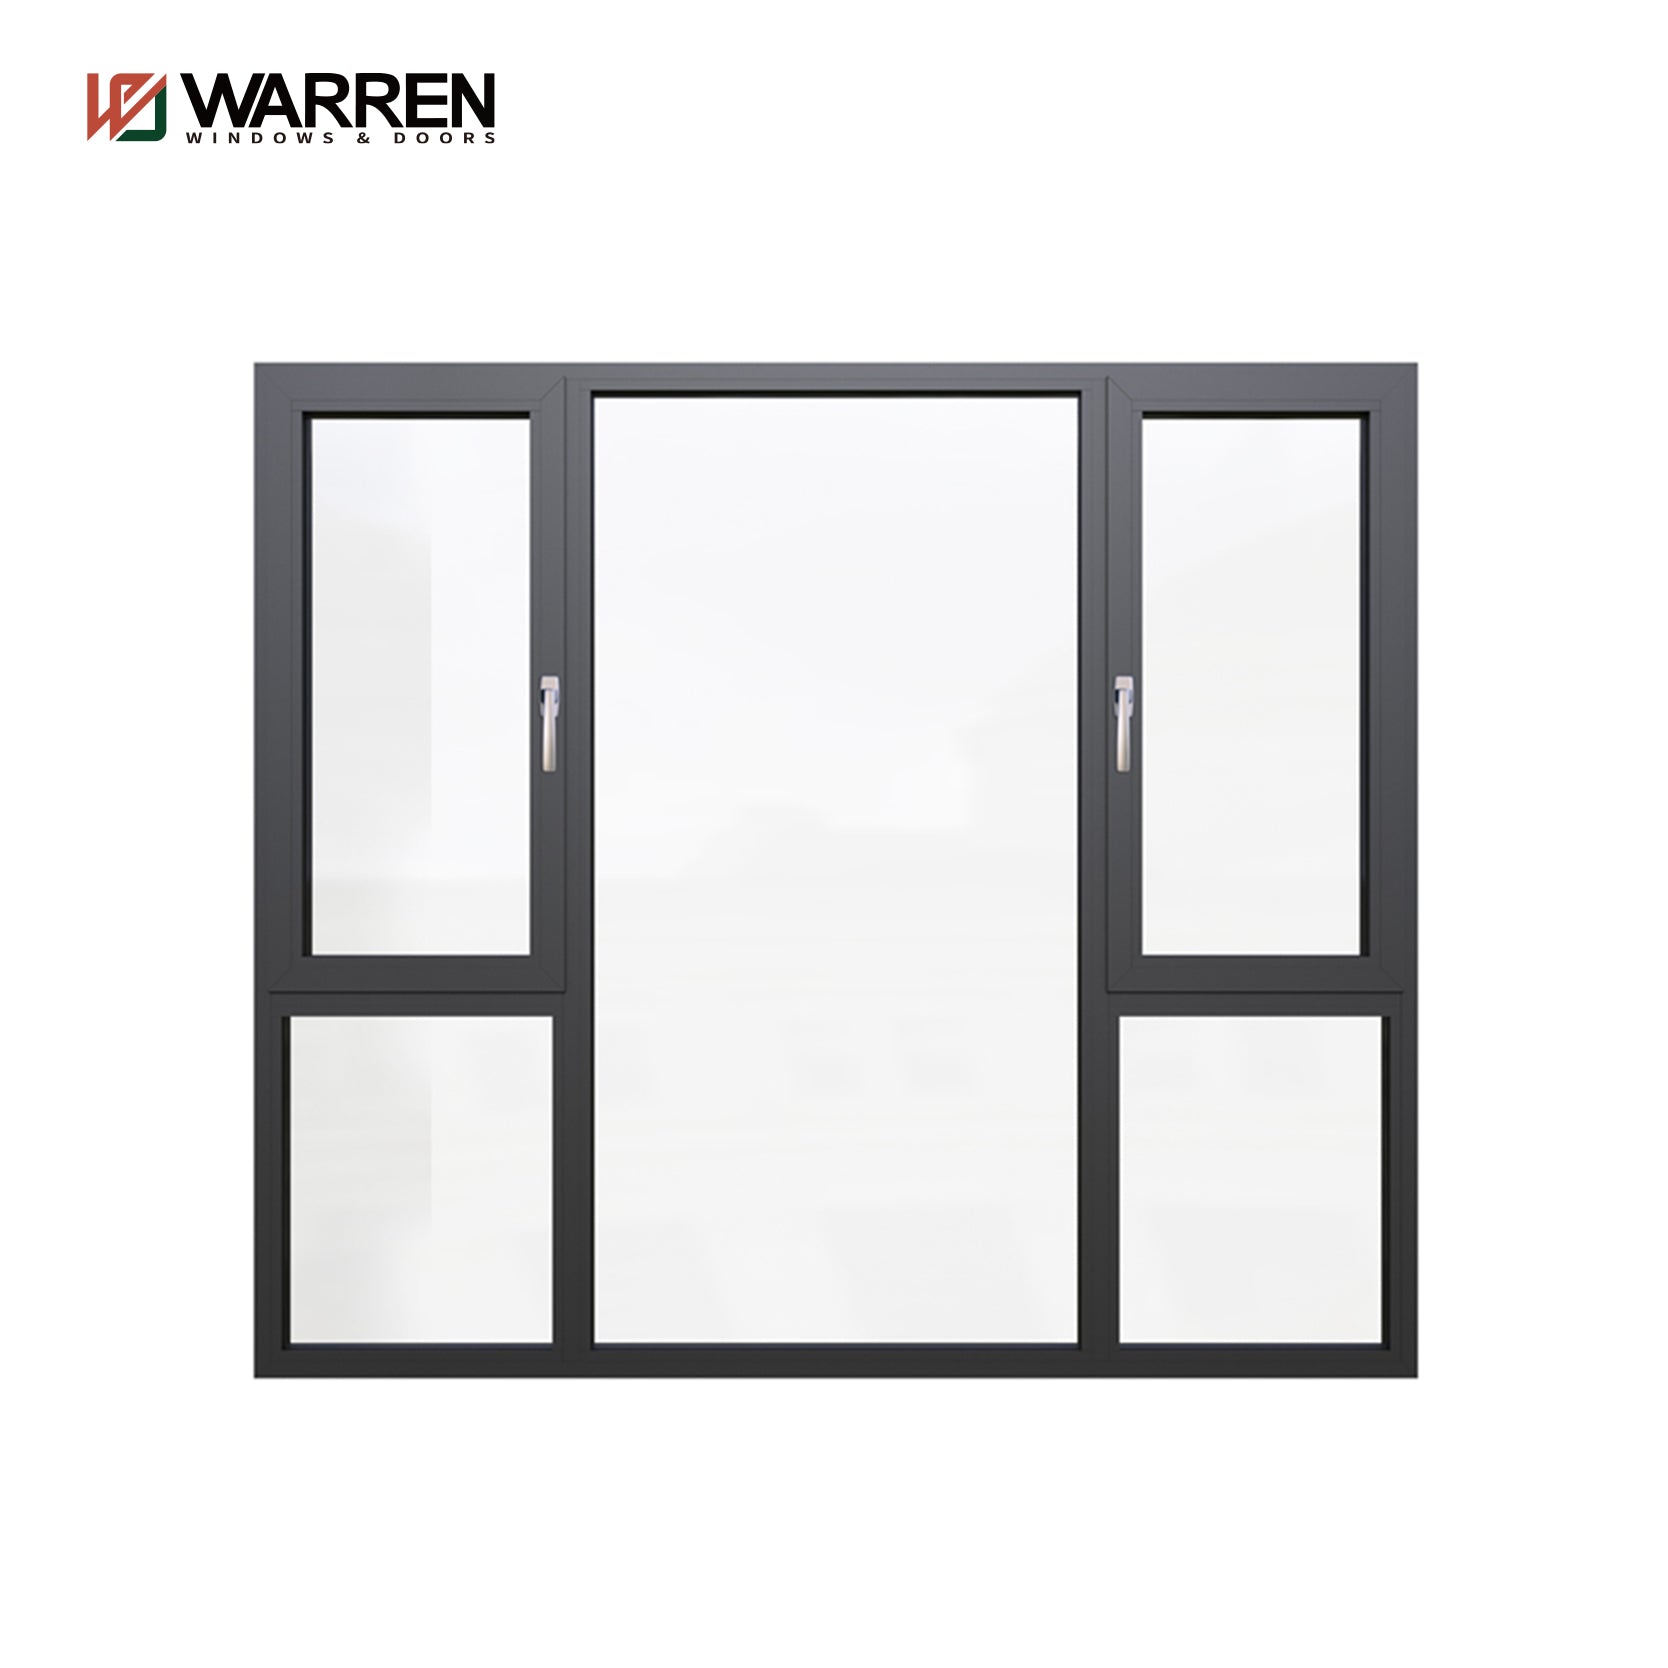 Warren Professional Aluminum Window Manufacturers Tilt Turn Window Hardware Passive House Alu Clad Windows